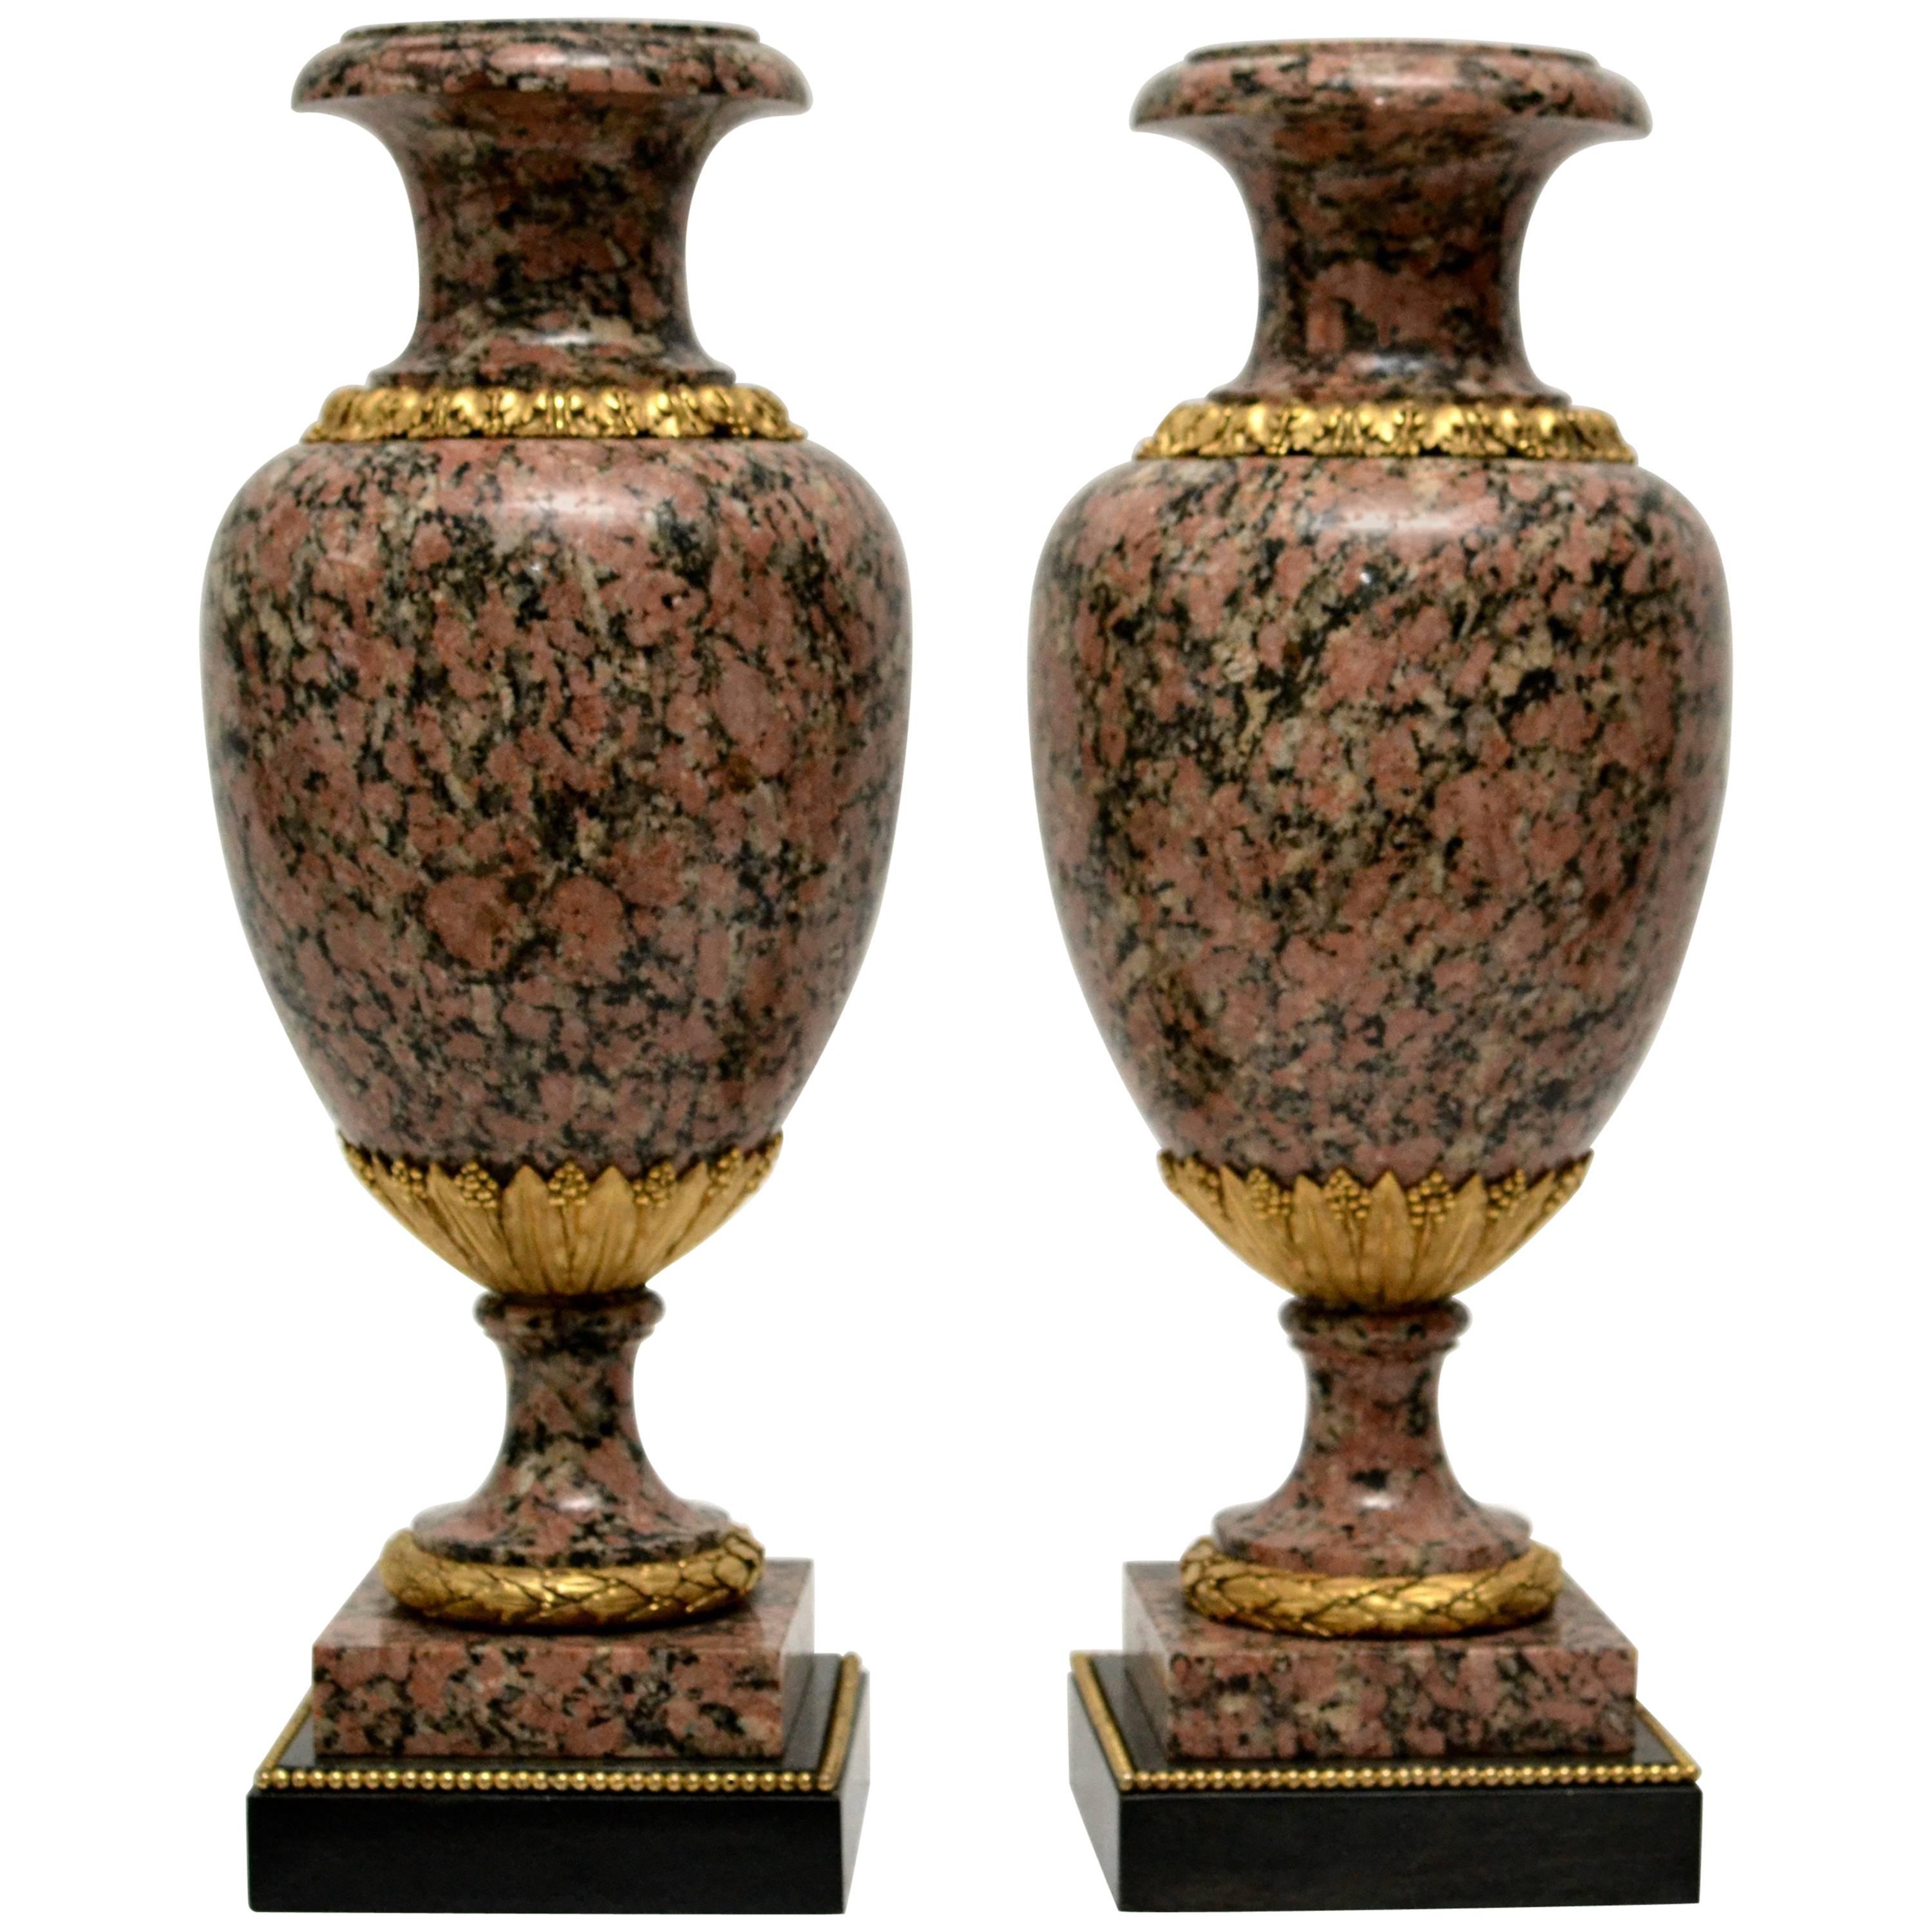 A Large Pair of Ormolu Mounted Louis XVI Style Granite Urns, 19th Century